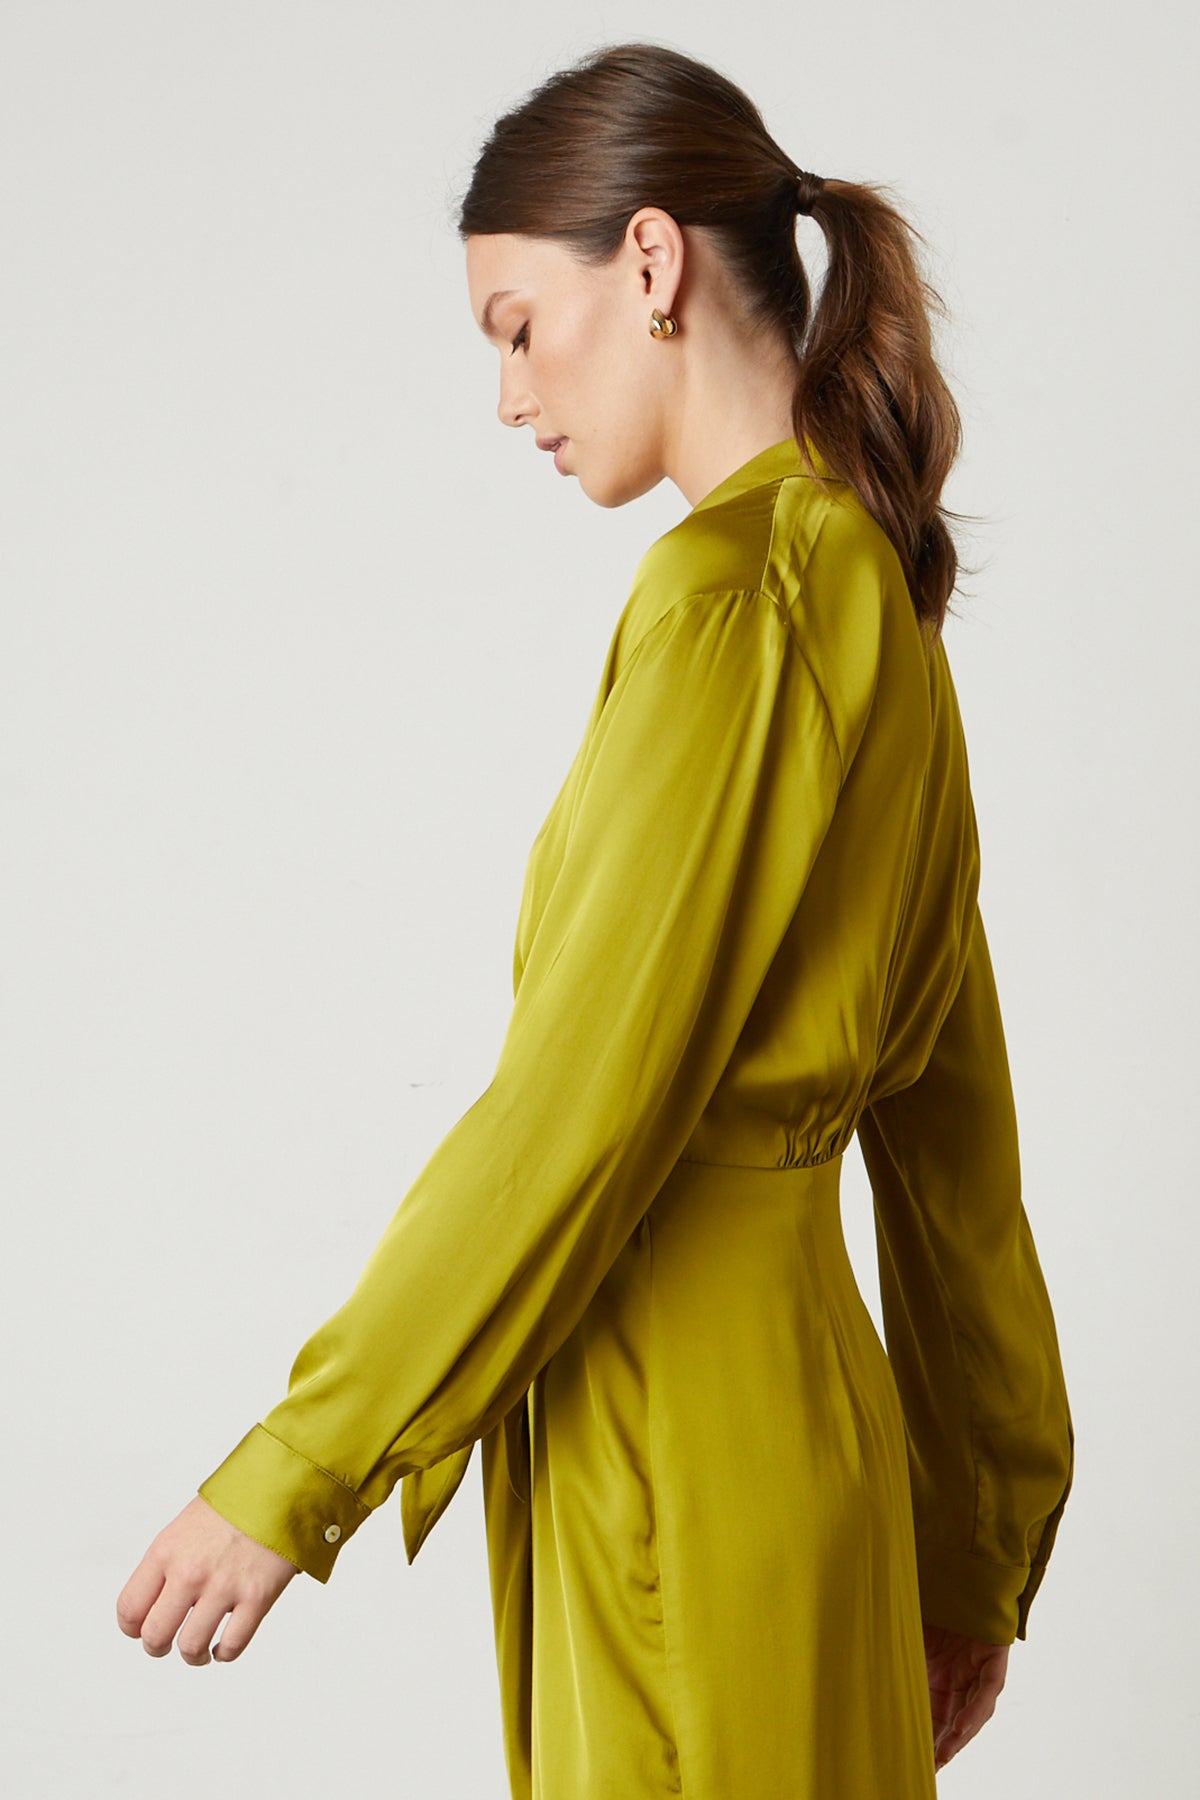   Jovie Satin Wrap Dress in bright meadow green side detail 